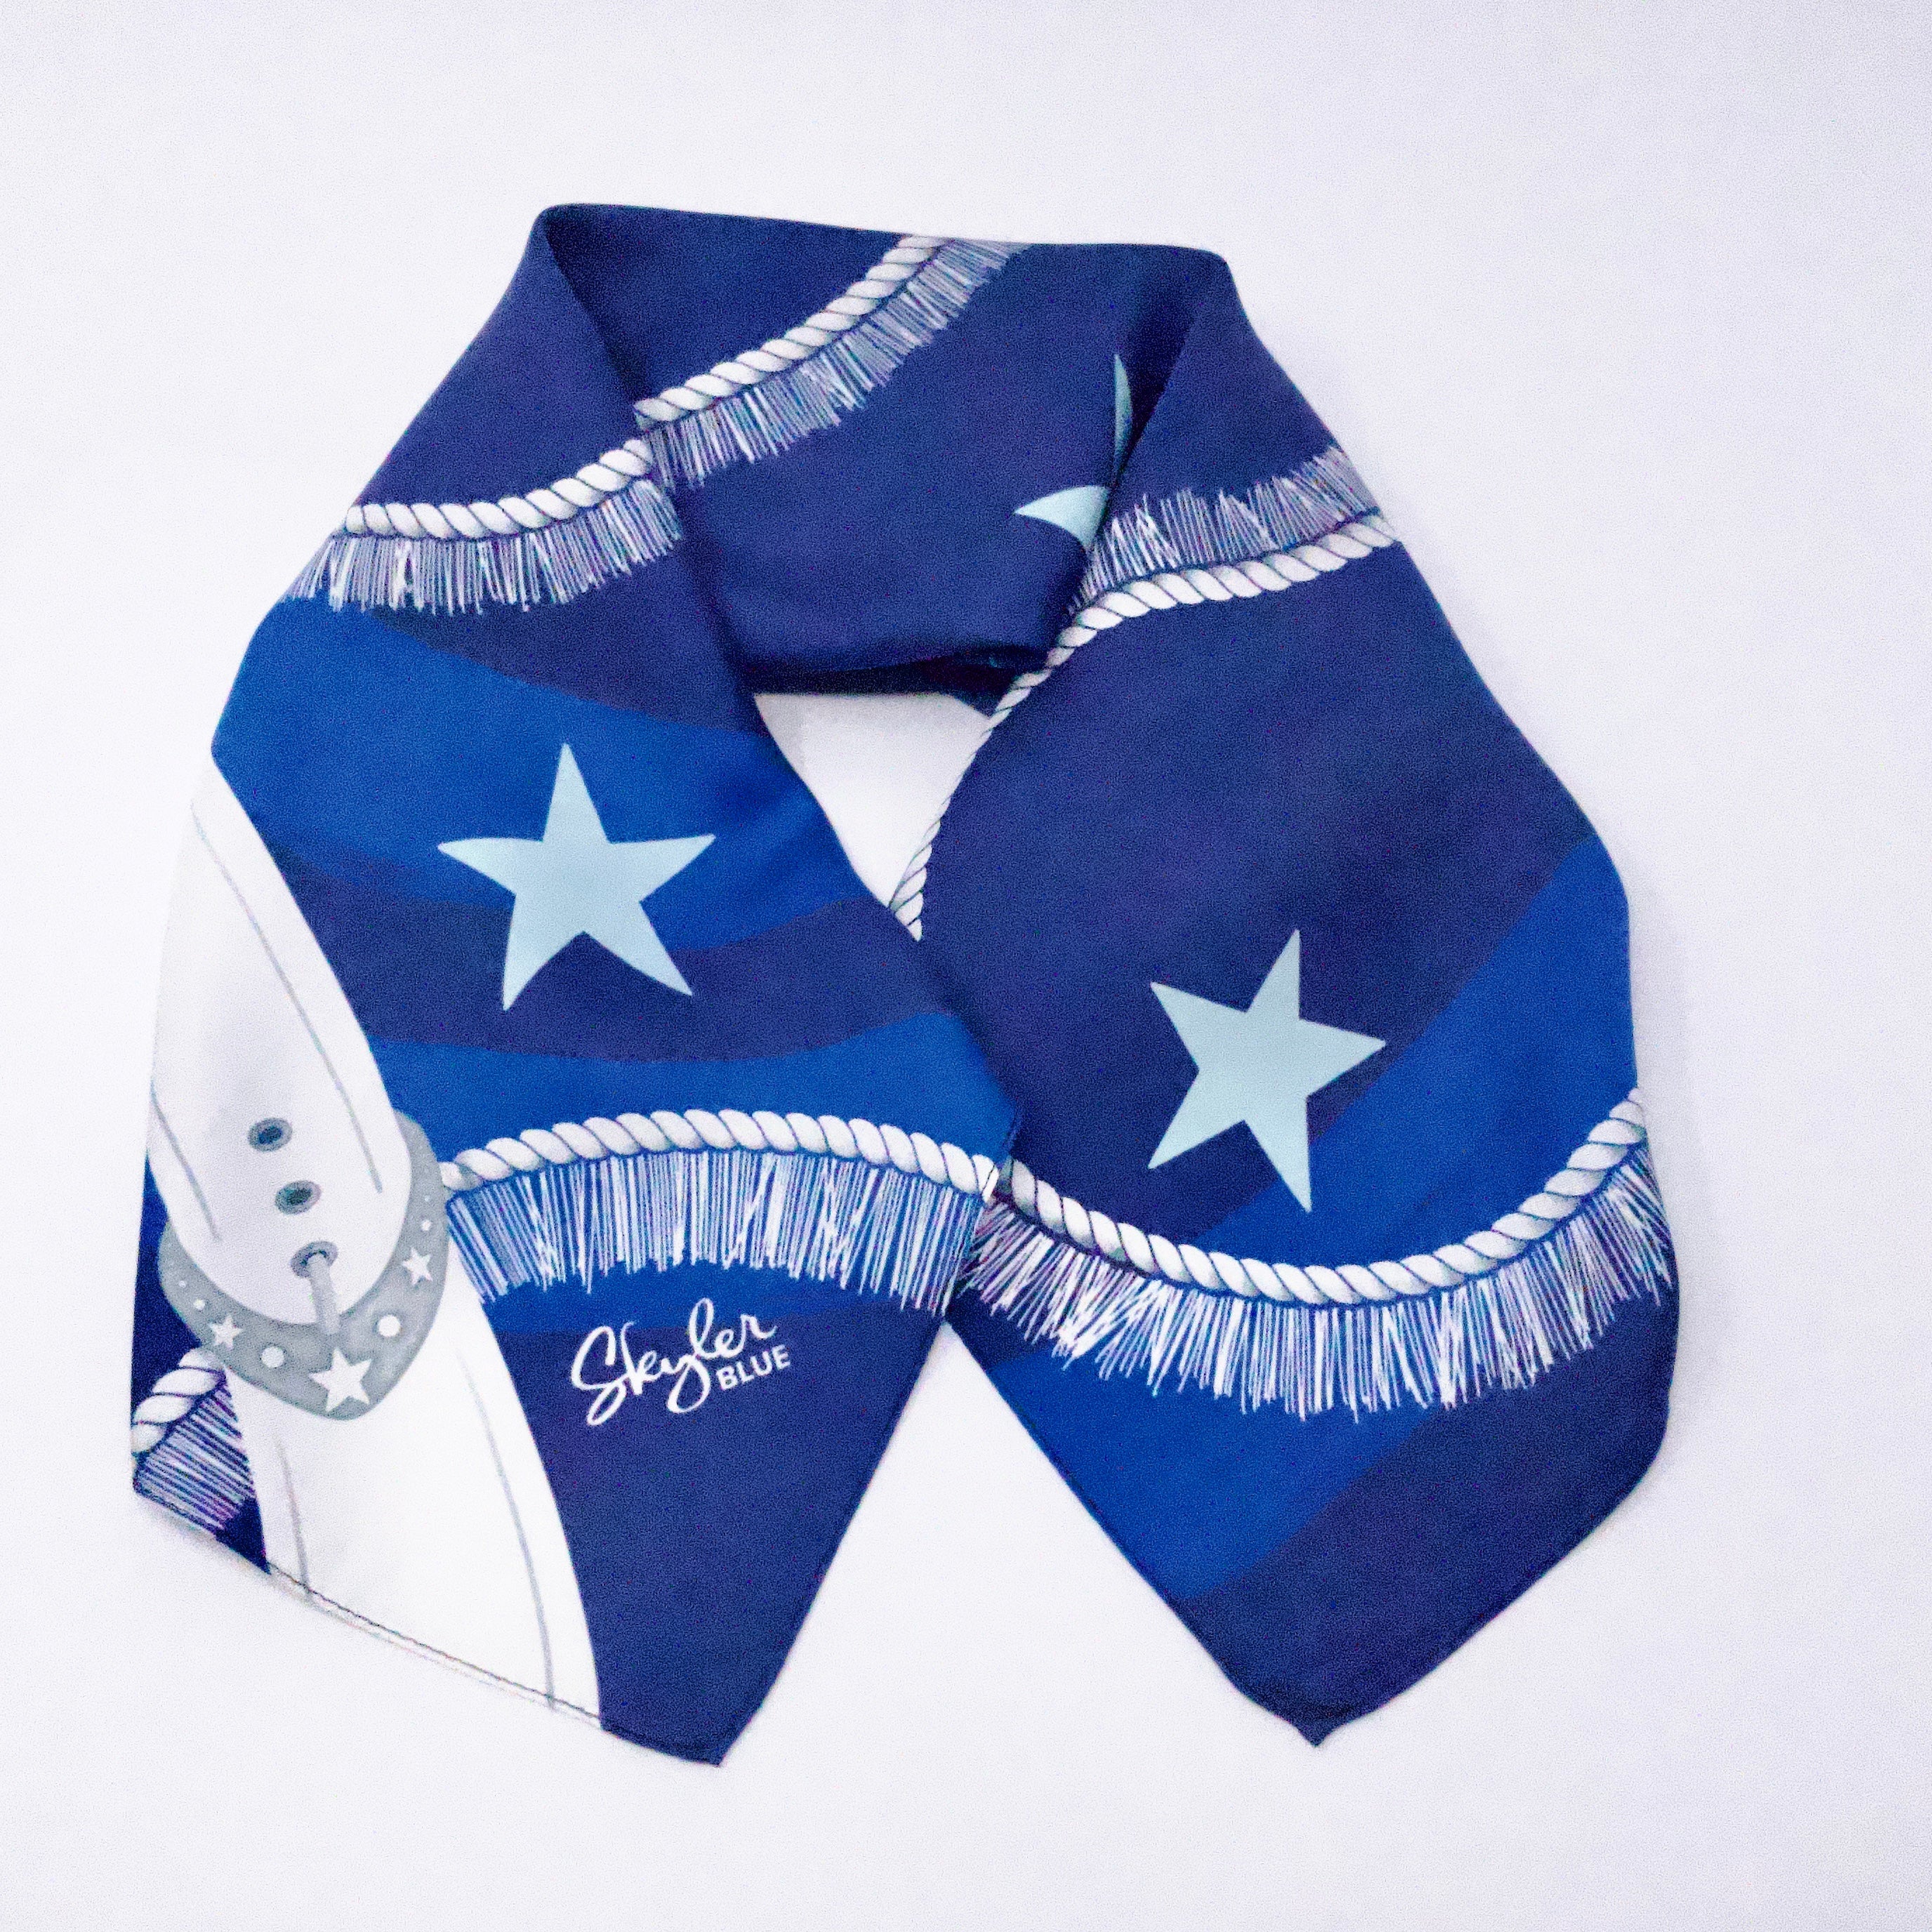 Skyler Blue’s The Dallas 002 88-centimeter 100% silk twill scarf